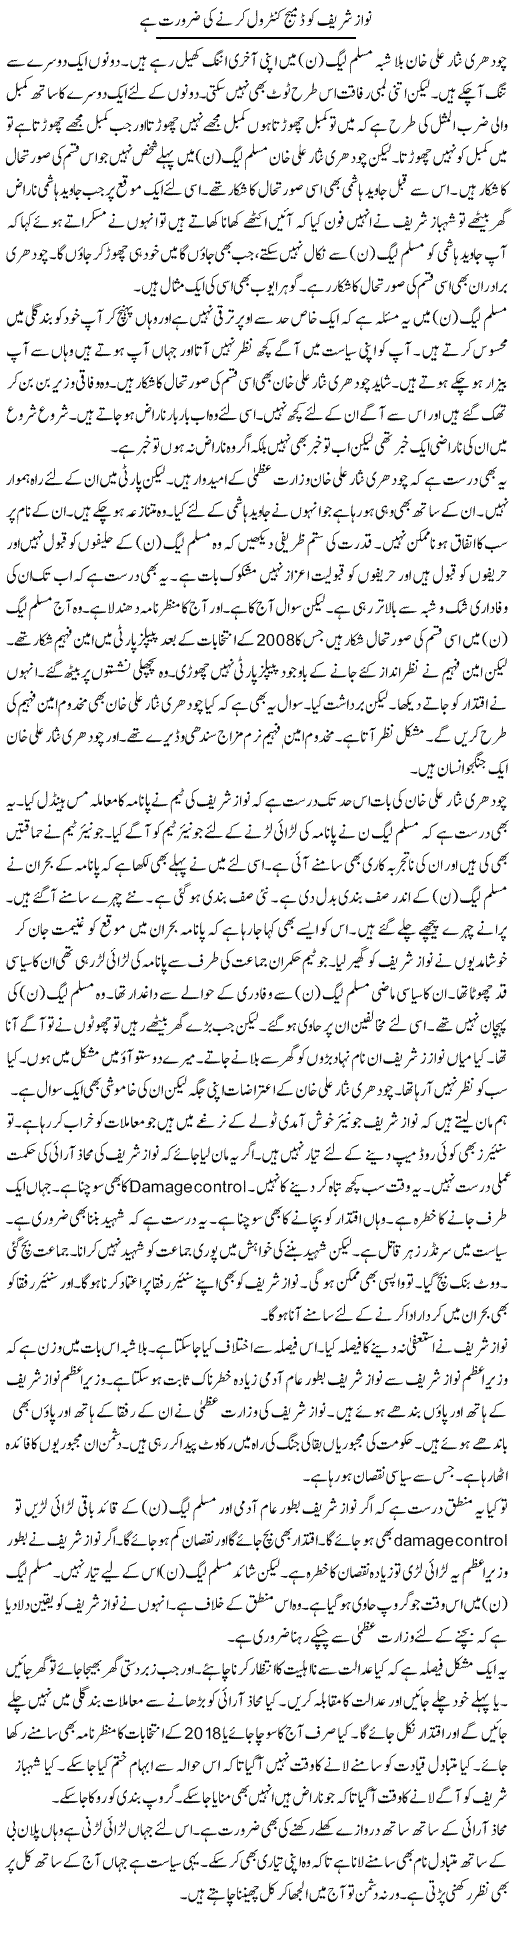 Nawaz Sharif Ko Damage Control Karne Ki Zaroorat | Muzamal Suharwardy | Daily Urdu Columns